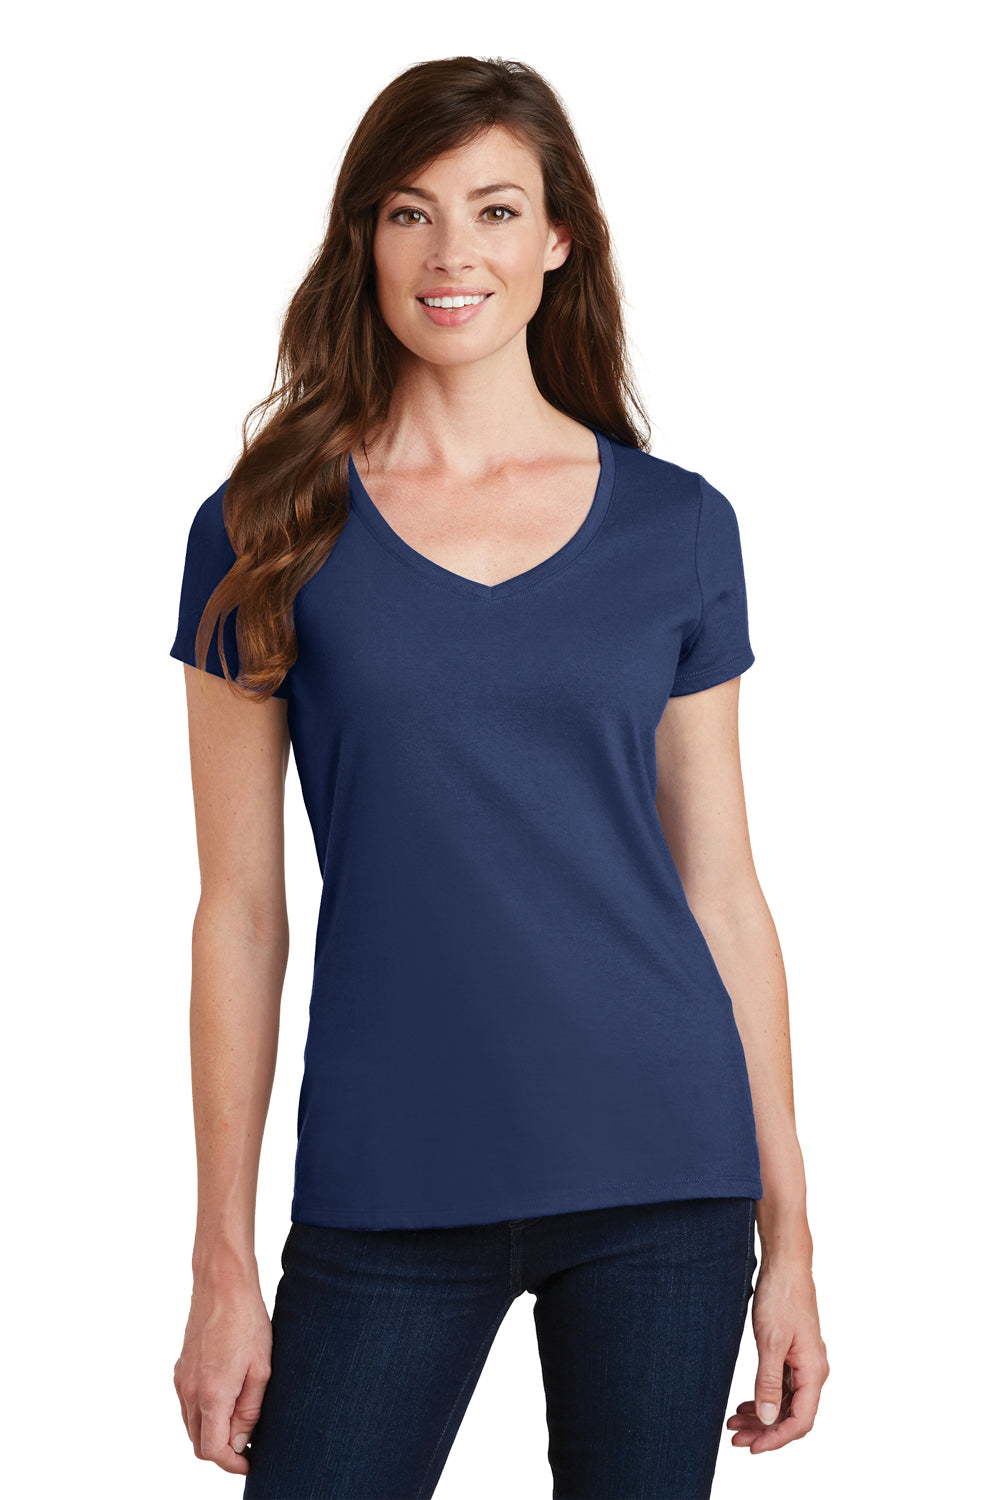 Port & Company LPC450V Womens Fan Favorite Short Sleeve V-Neck T-Shirt Navy Blue Front